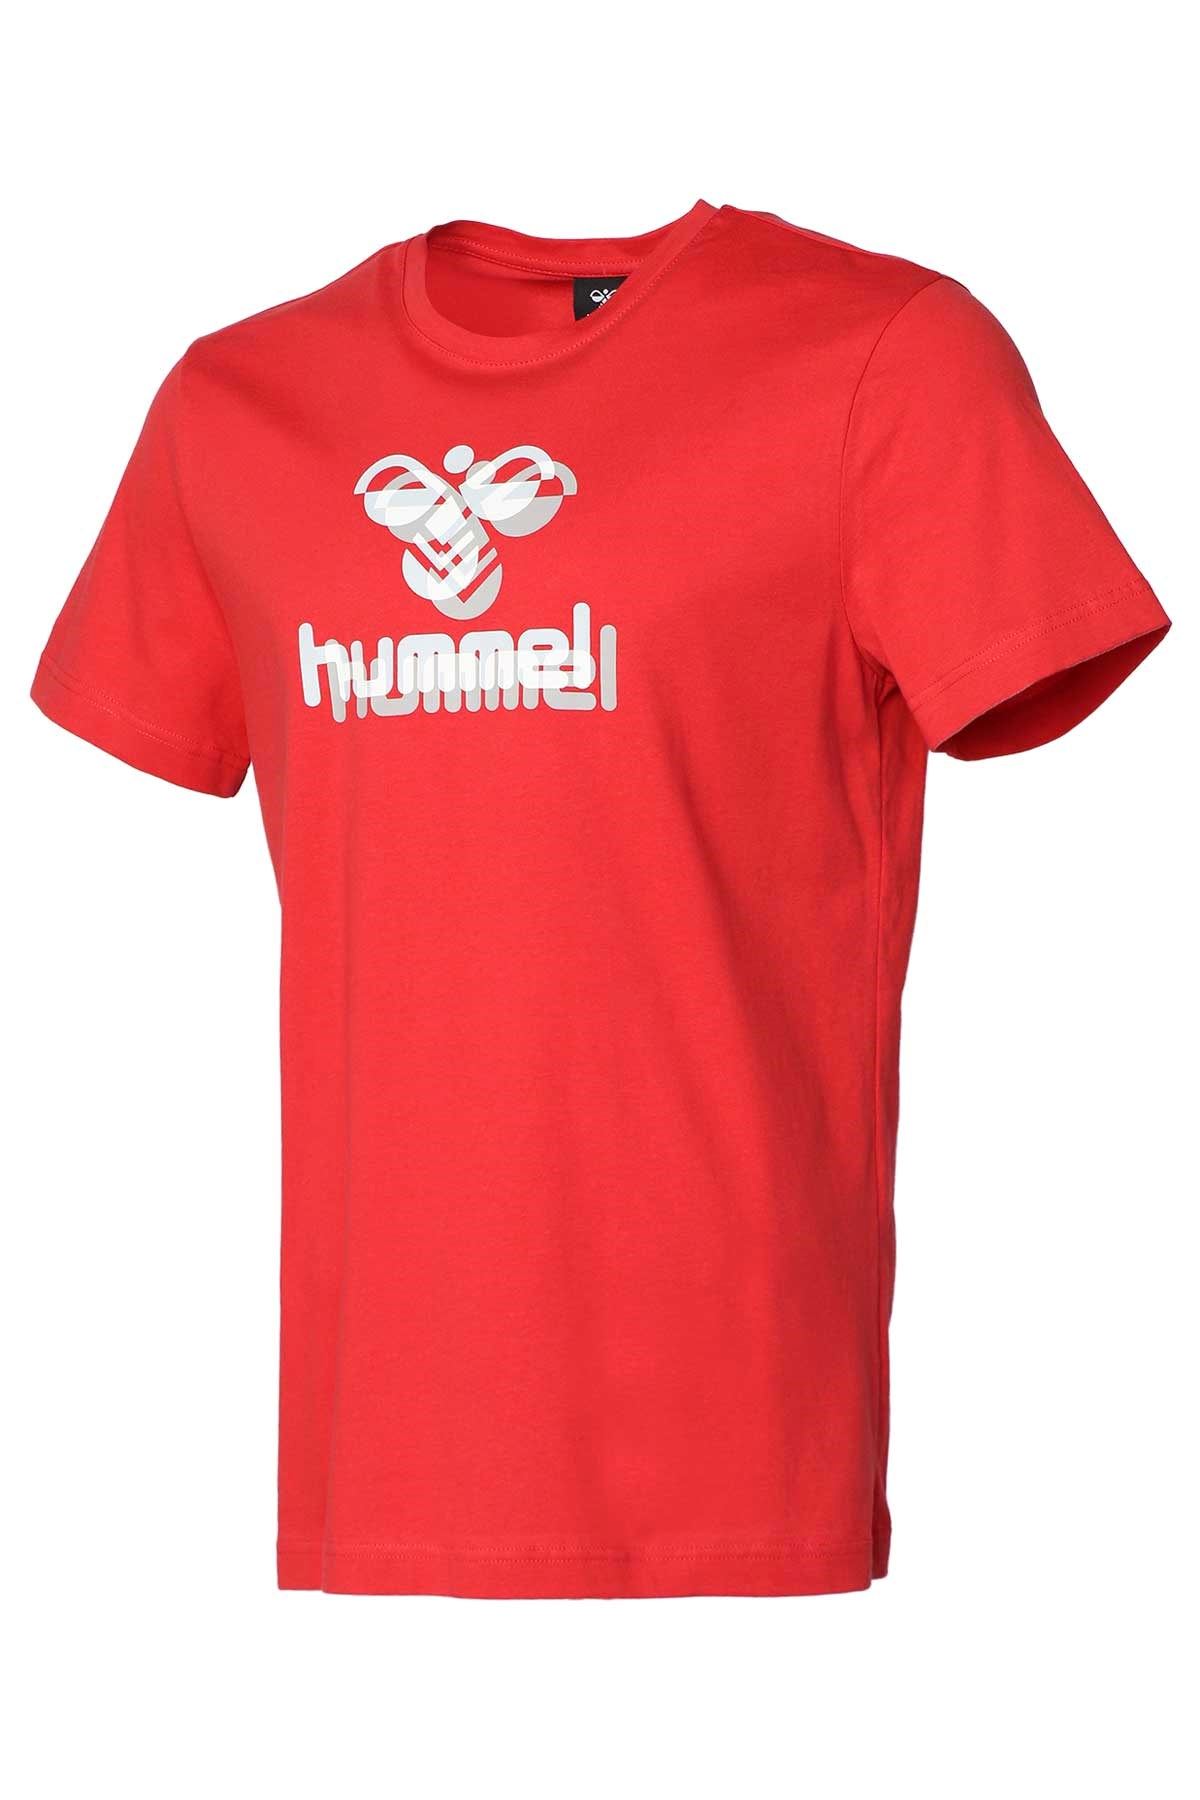 Hummel Hmlsenna T-Shırt S/S Erkek Kırmızı Tişört - 911702-2220